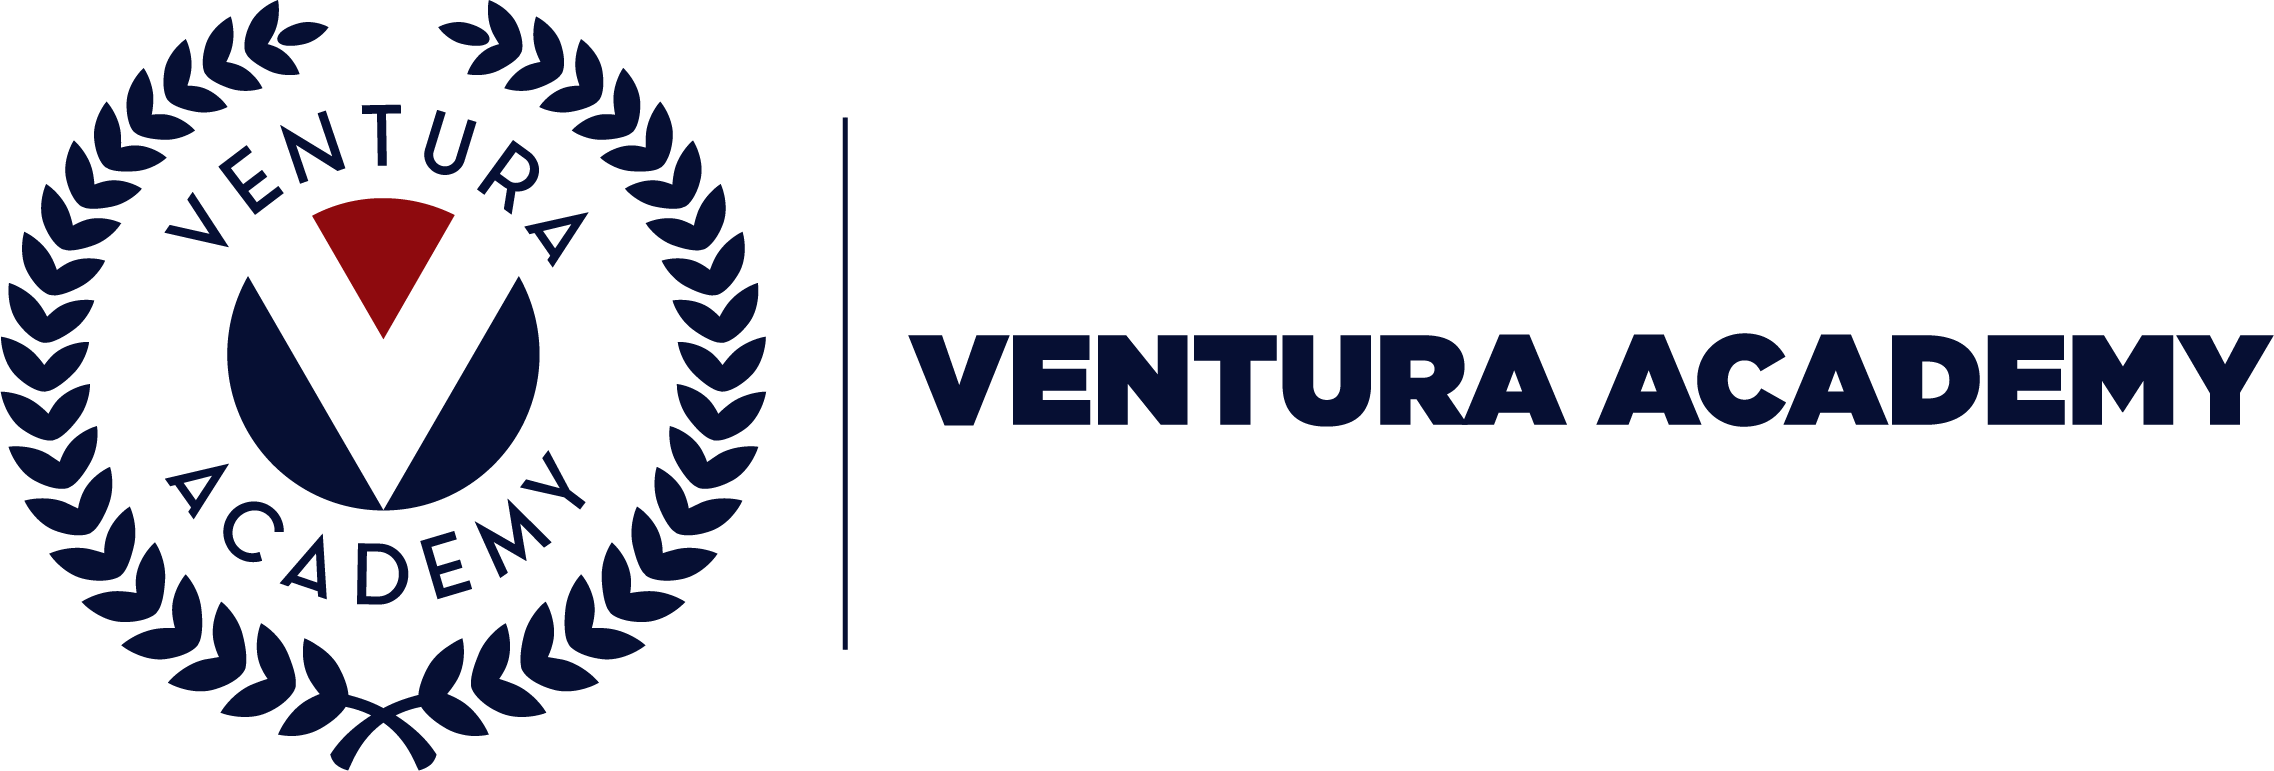 Ventura Academy